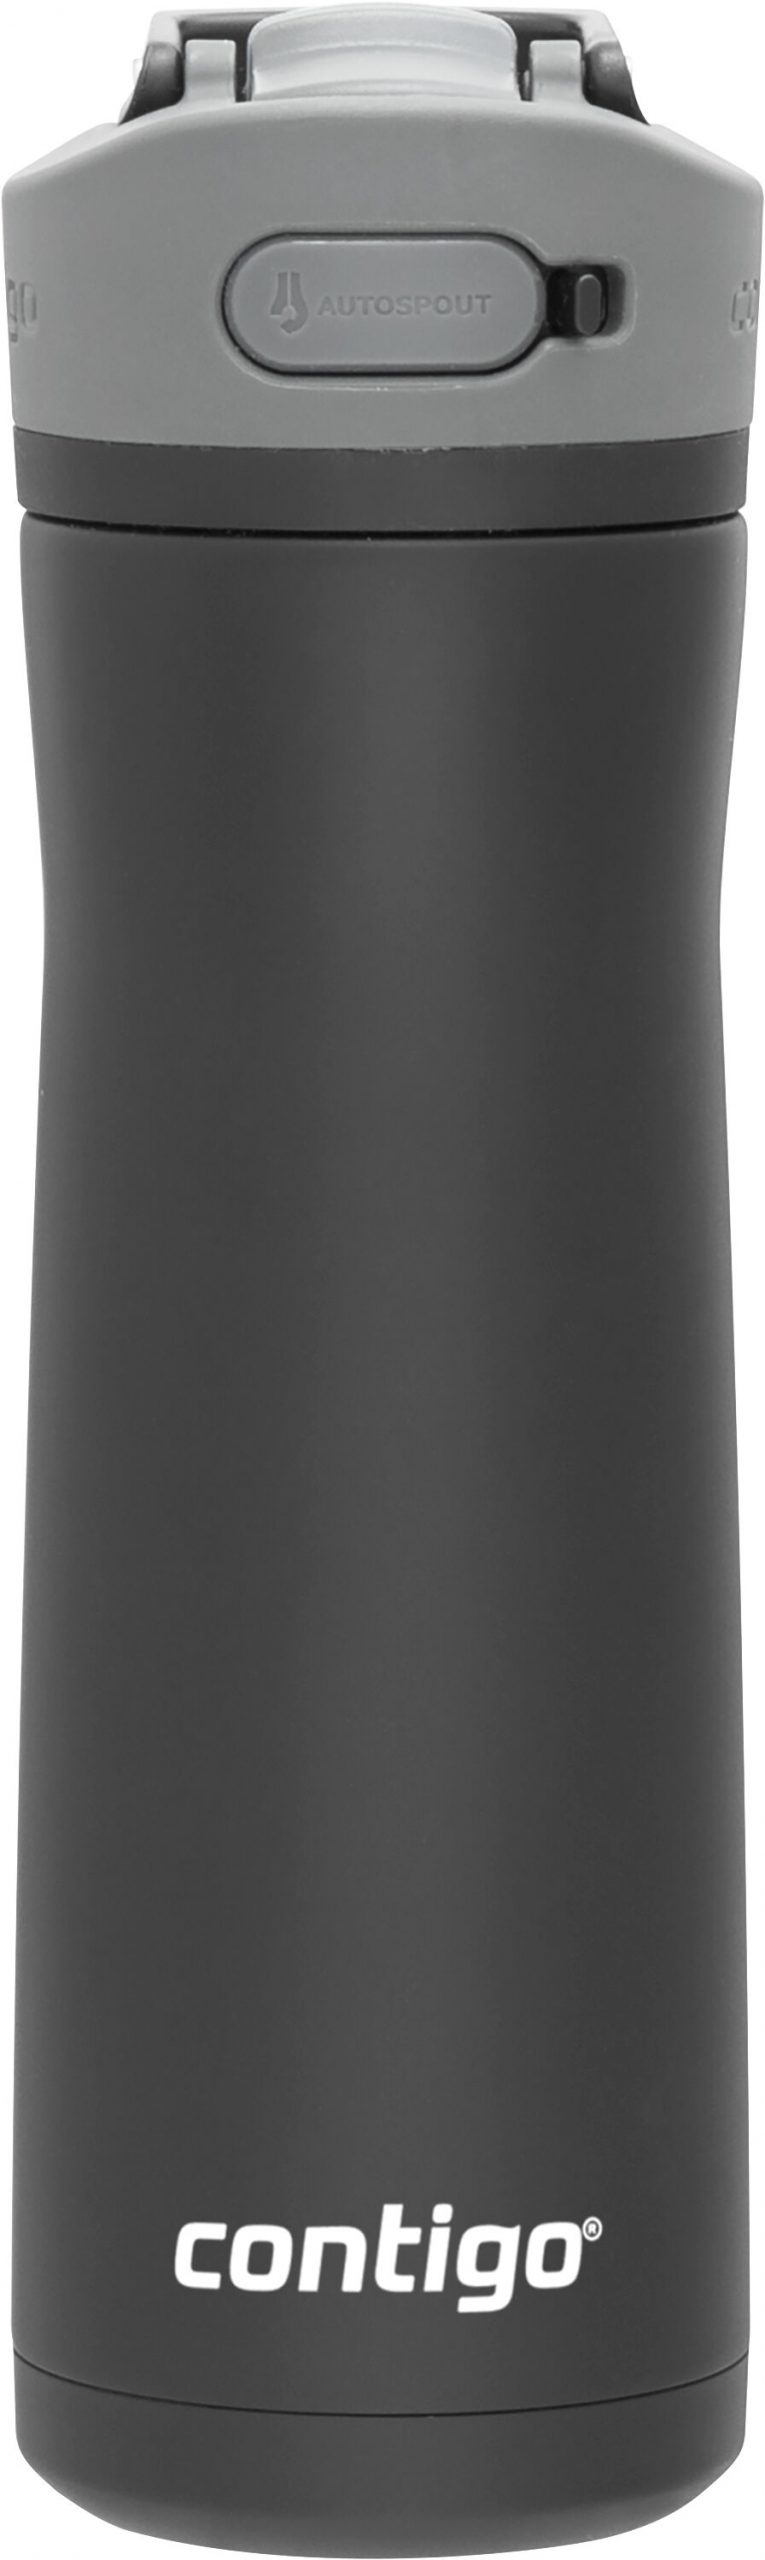 Custom Branded Contigo Drinkware - Licorice